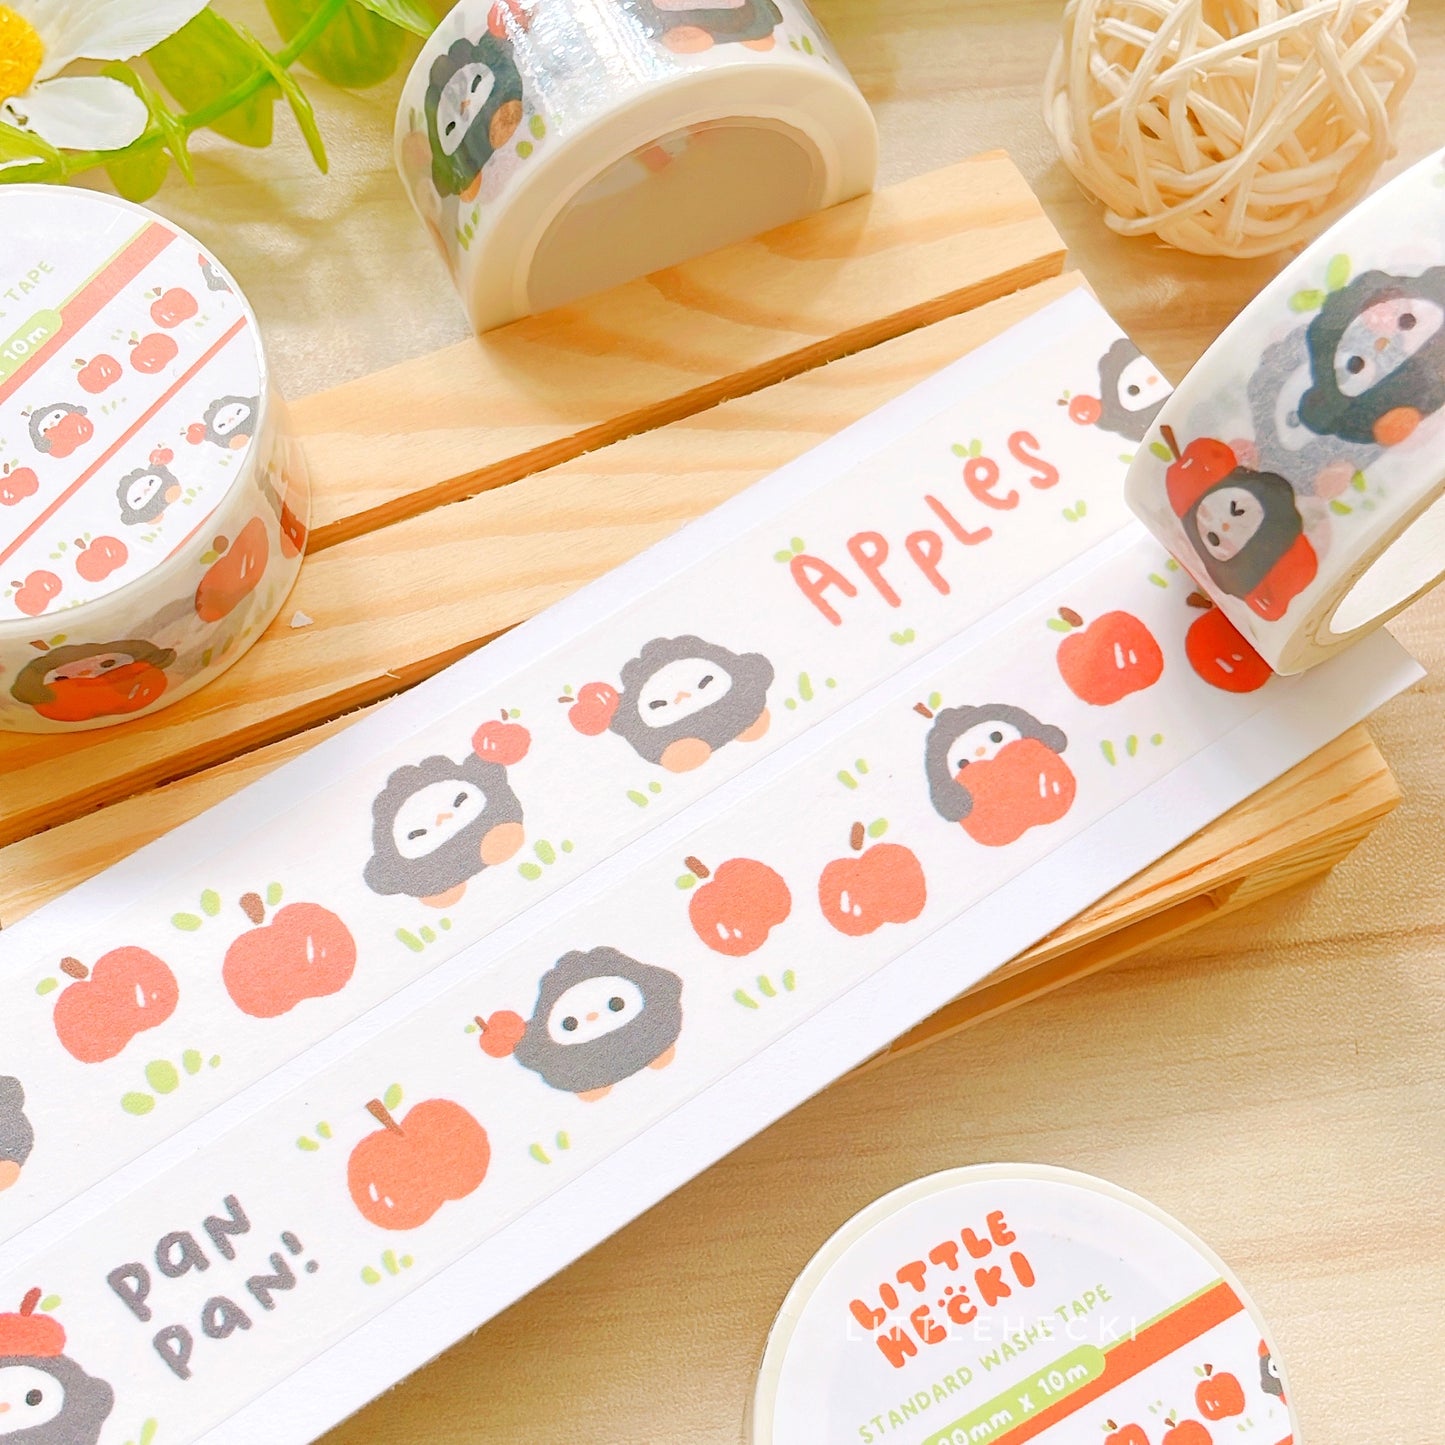 Pan Pan and Apples Washi Tape